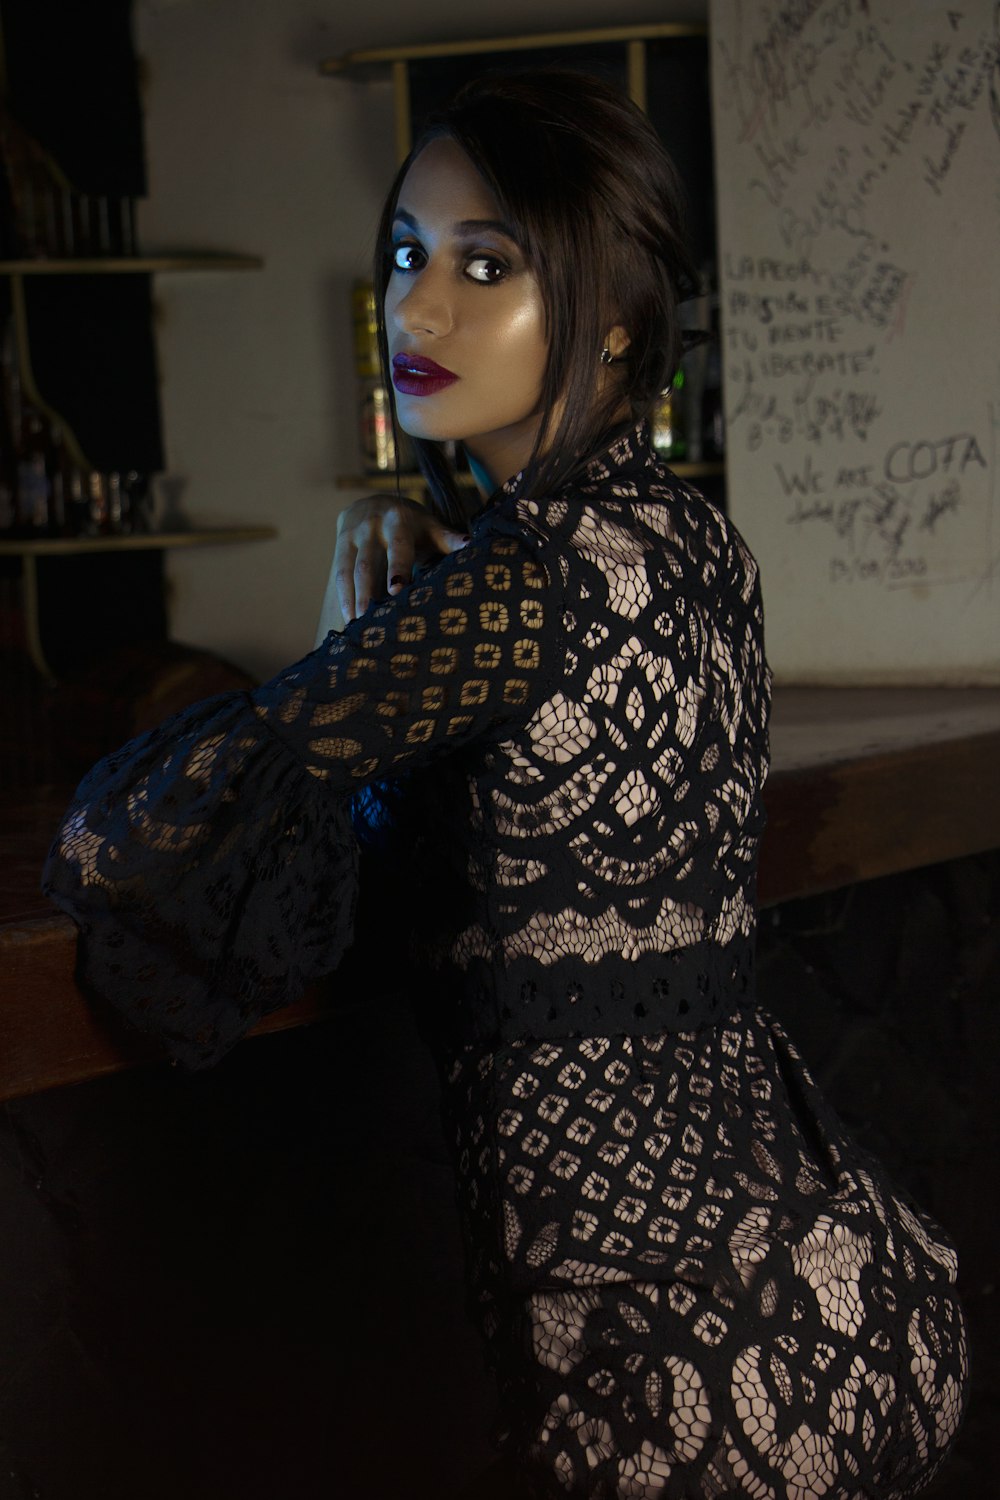 woman wearing black lace dress near bar counter